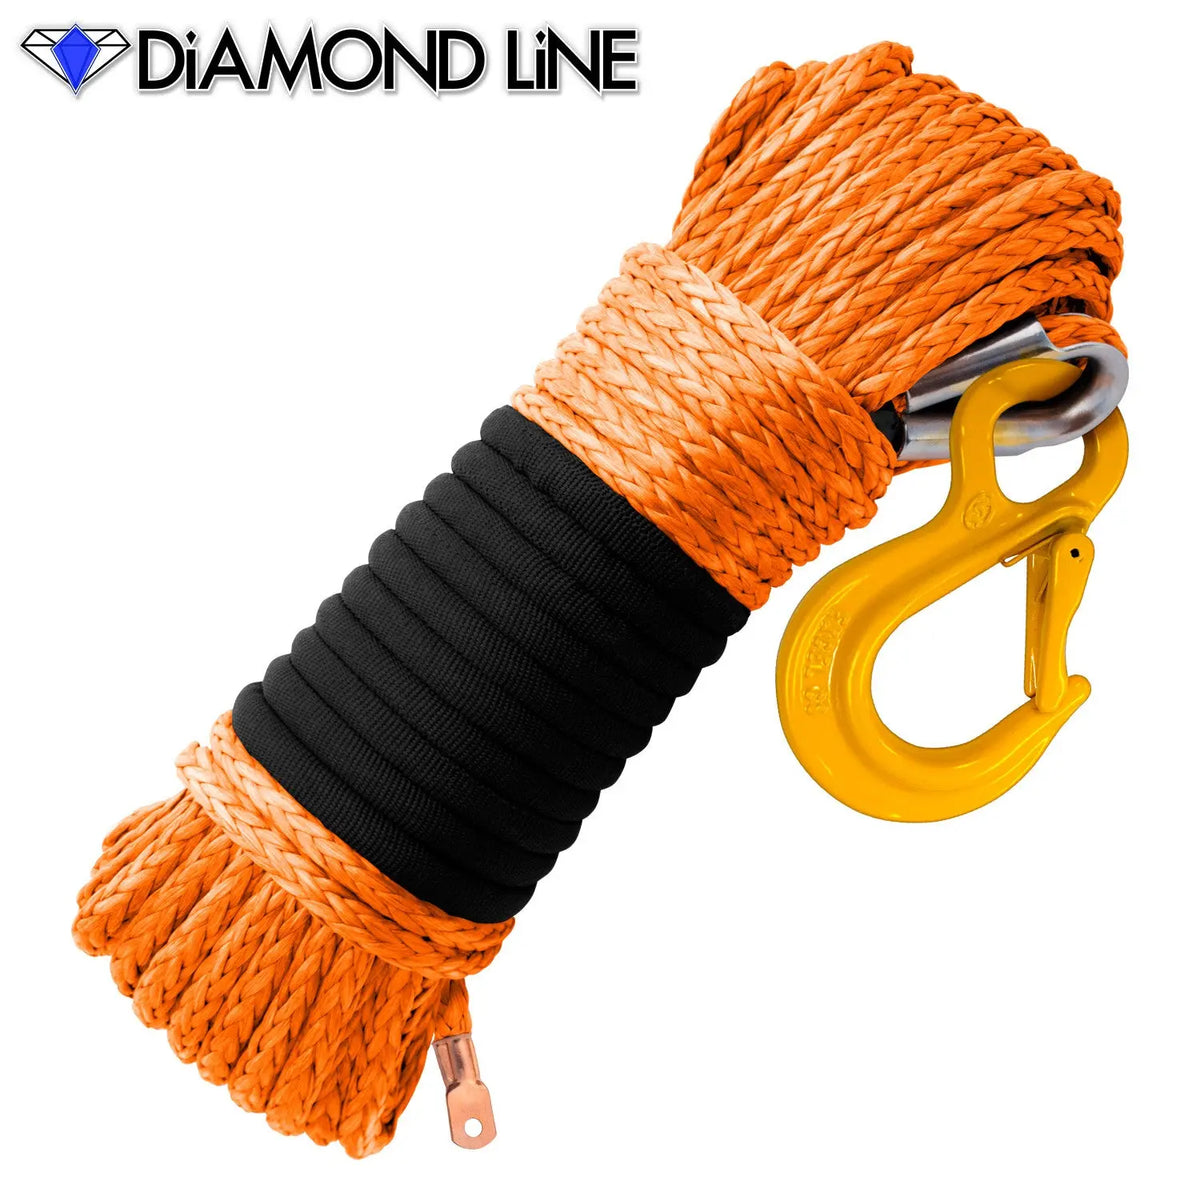 5/16" Diamond Line Winch Rope Mainline - Orange with Hook. 